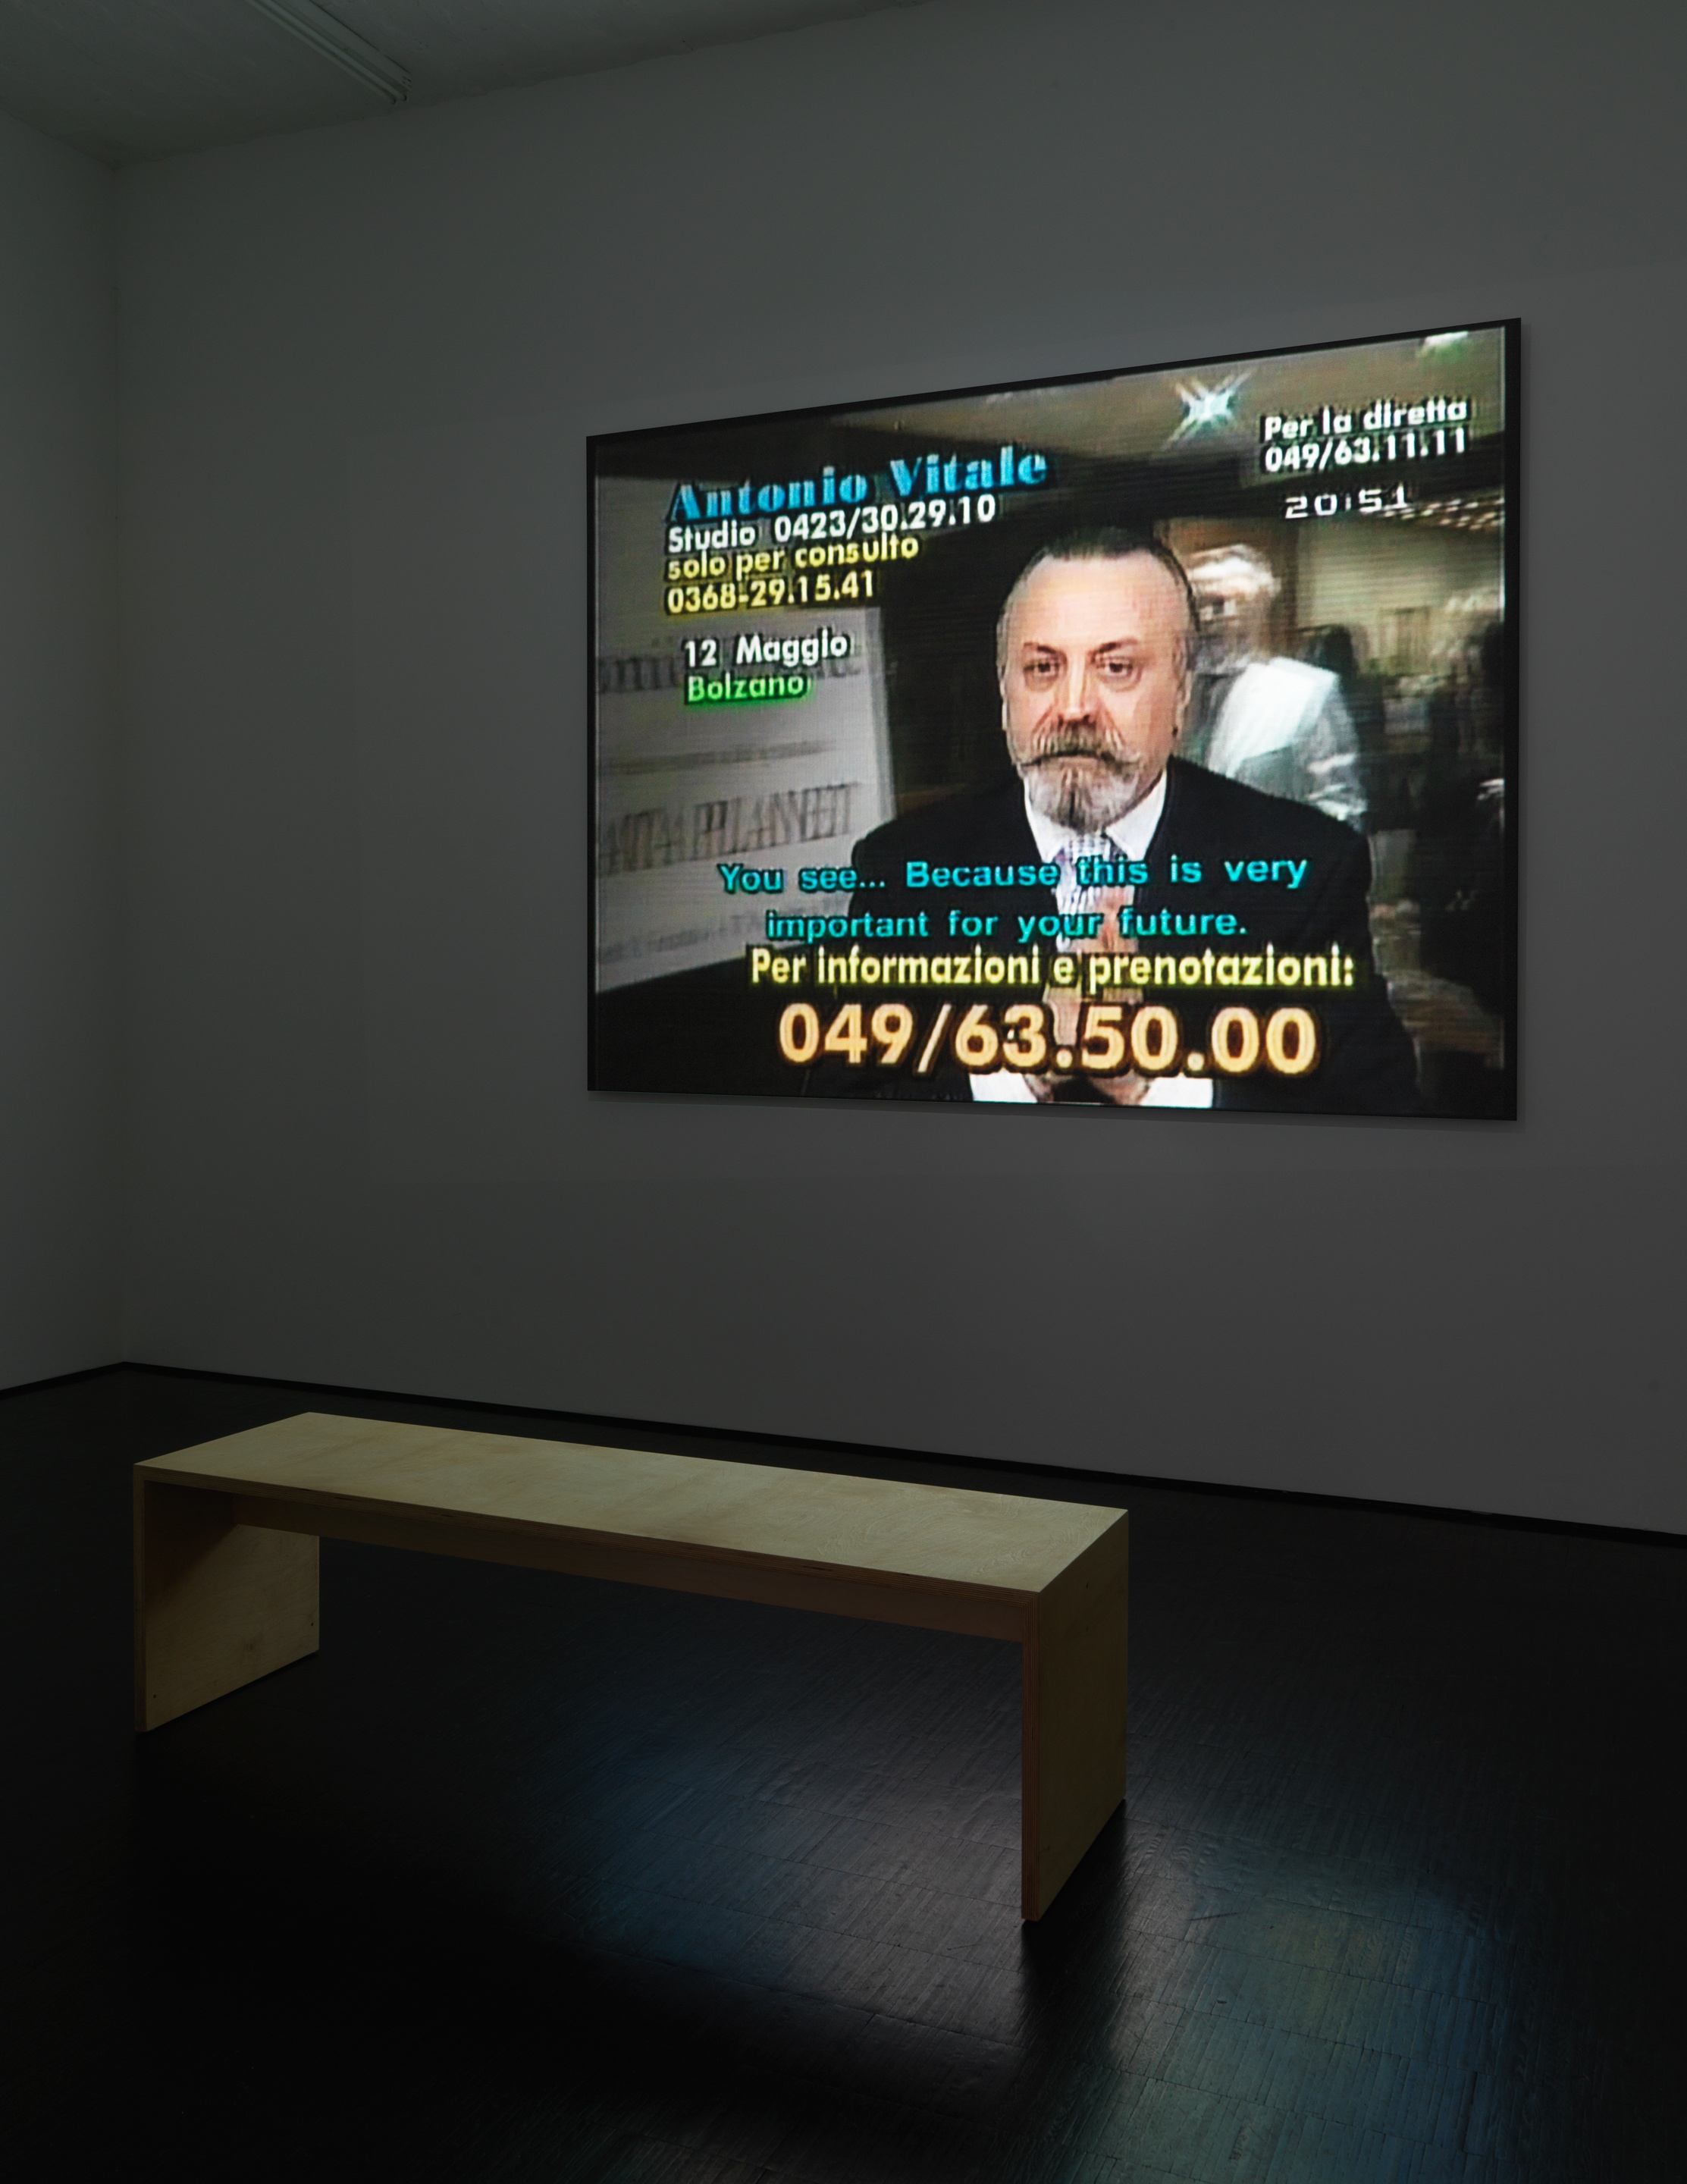 Christian JankowskiTelemistica, 1999video installation (standard definition, colour, sound); 21:55 minViewing link